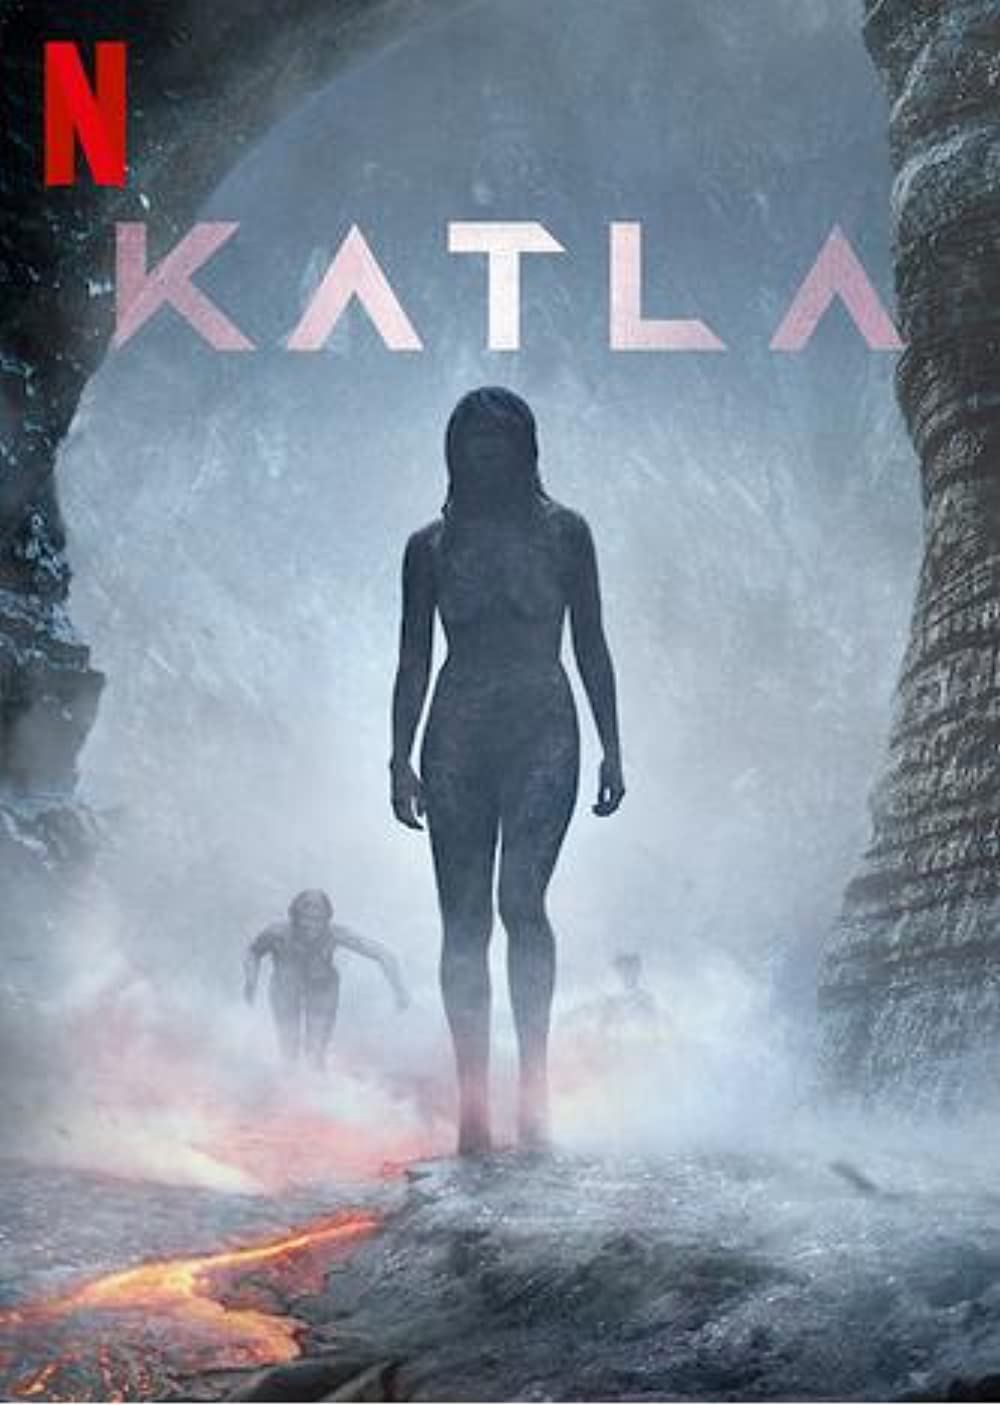 Poster Phim Katla (Katla)